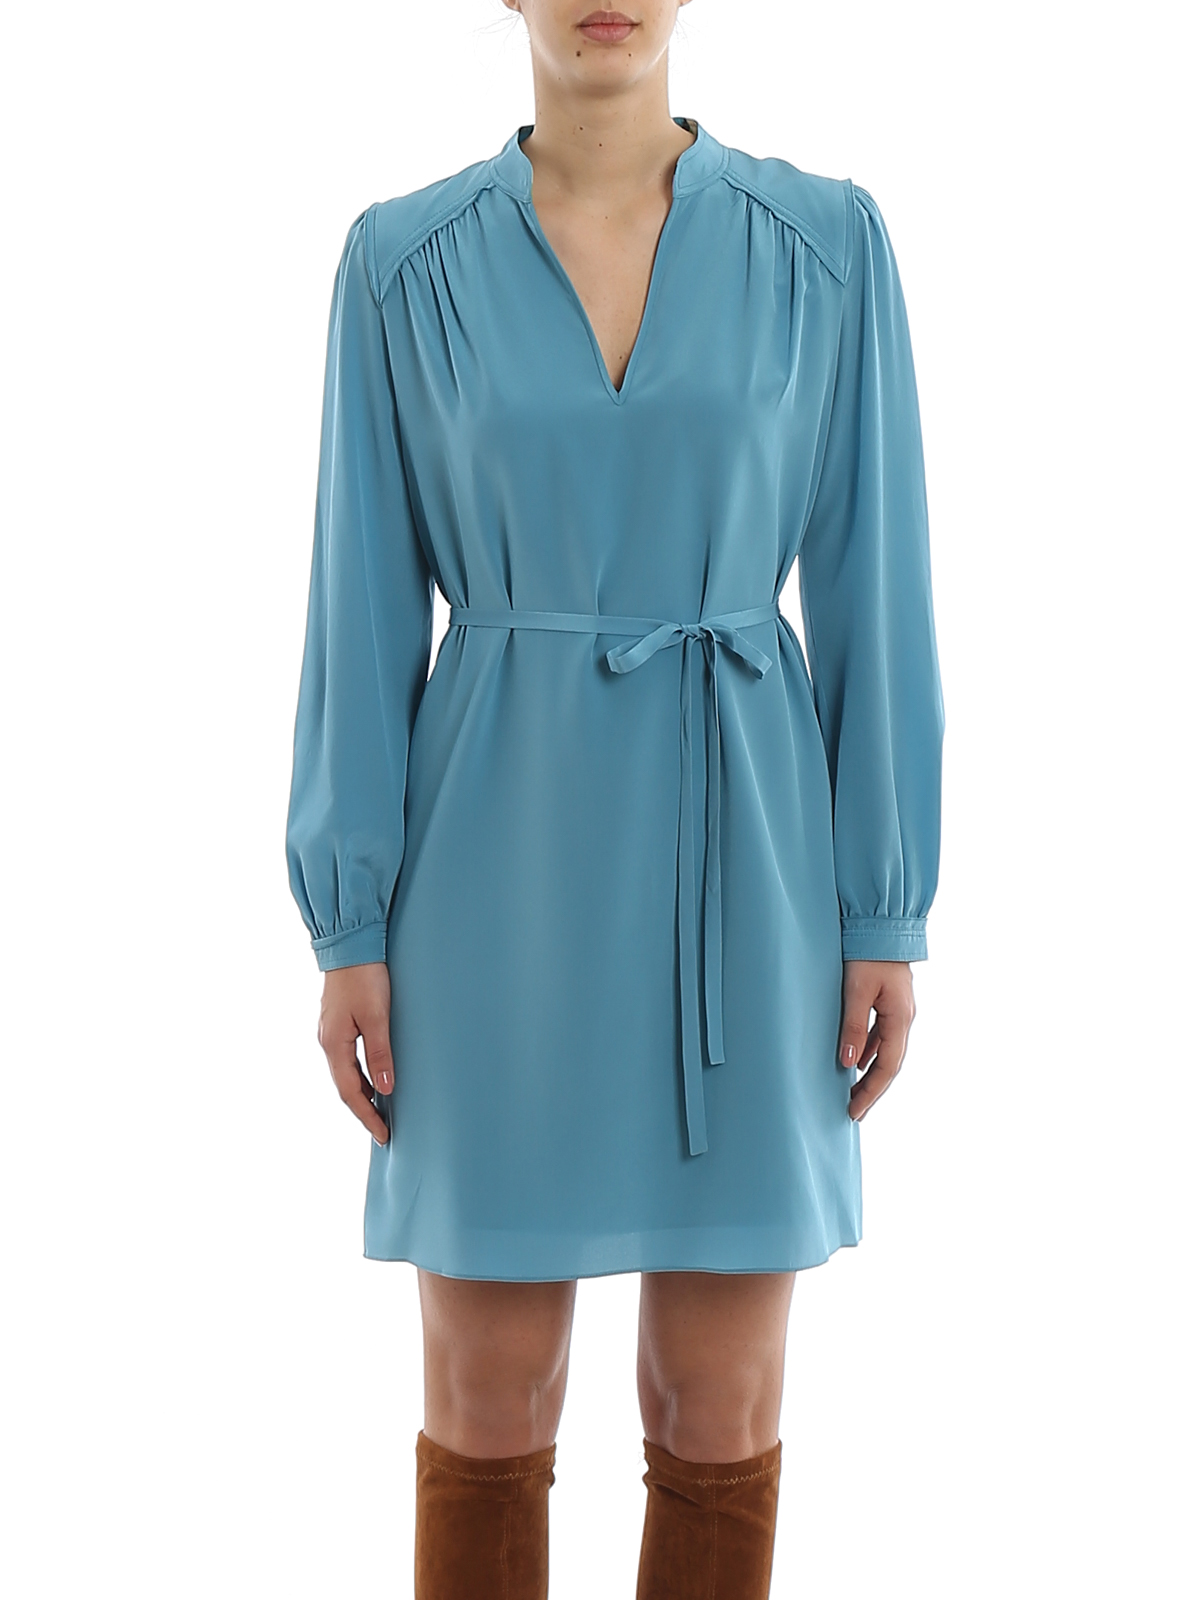 turquoise silk dress